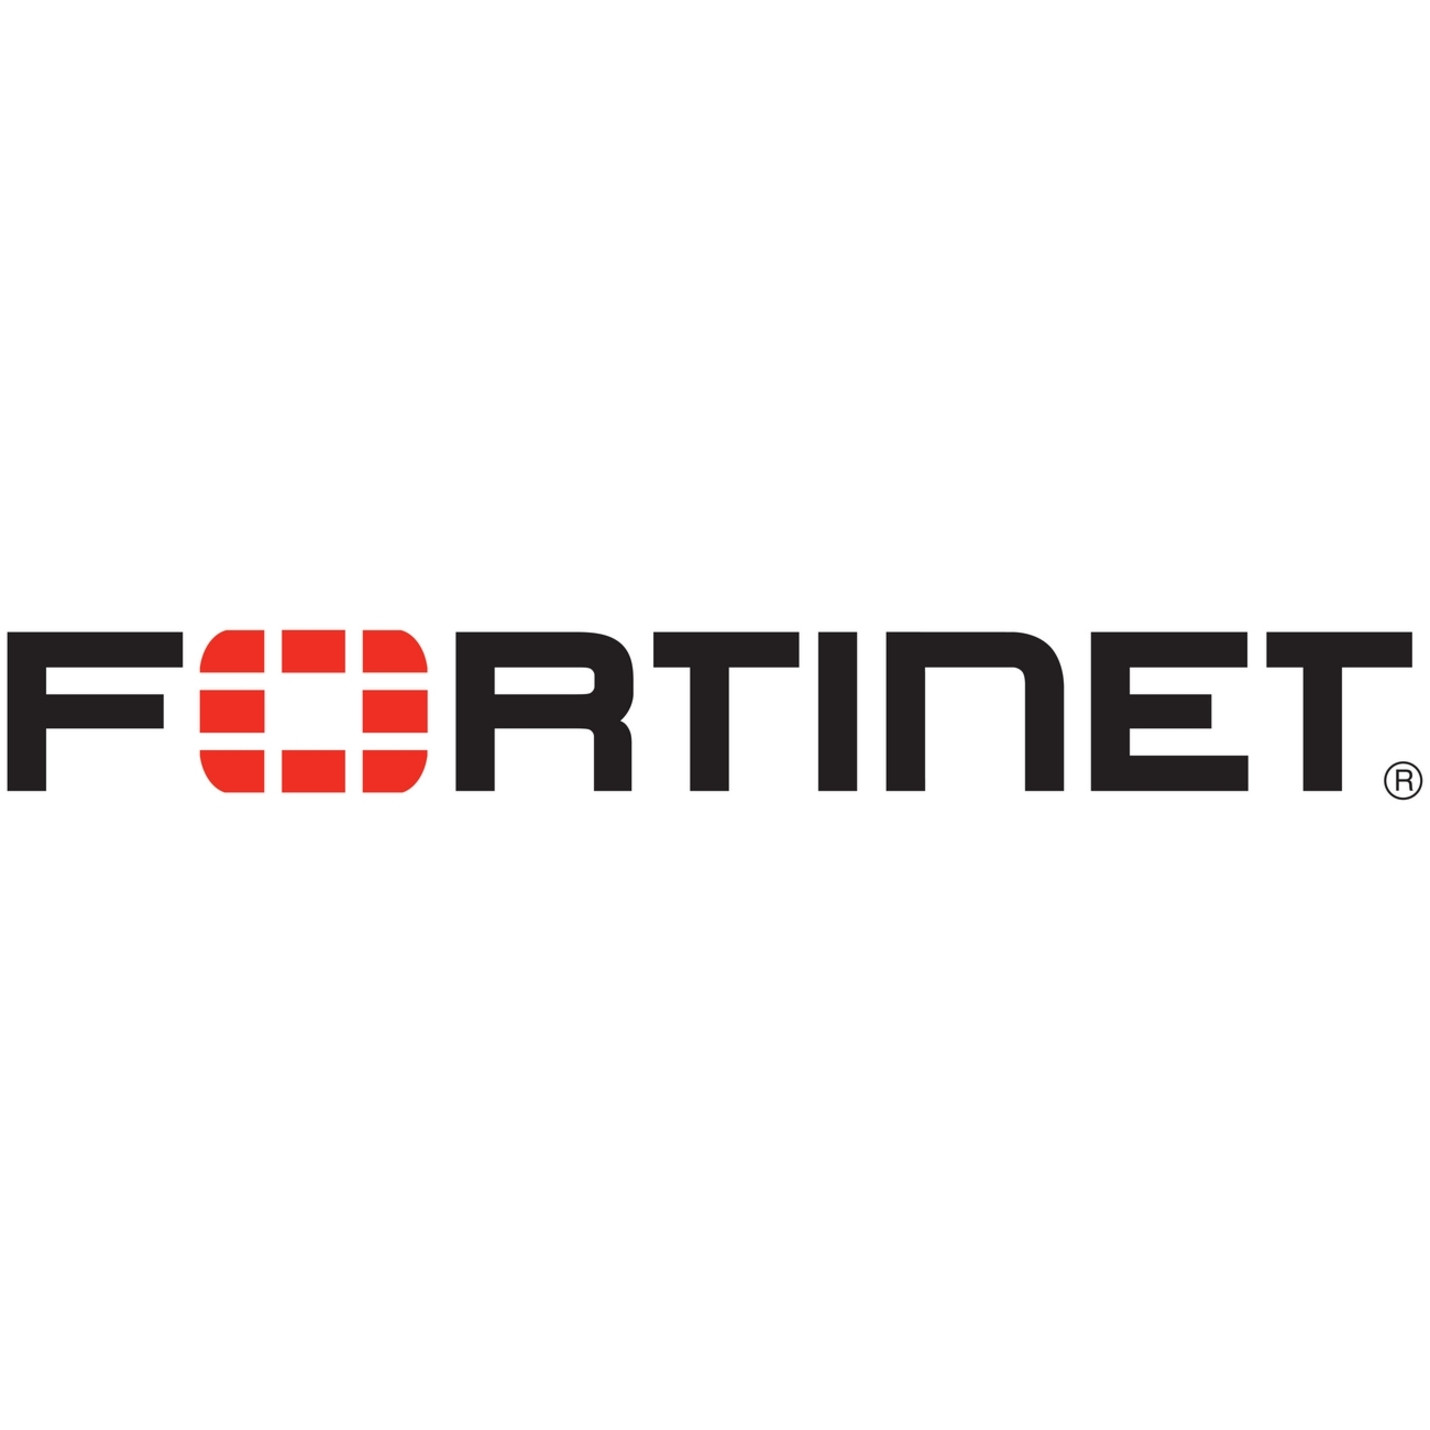 Fortinet Enterprise Bundle (FortiCare plus NGFW, AV, Web Filtering, Antispam, Botnet IP/Domain, FortiSandbox Cloud and Mobile Secu… FC-10-7K6E3-974-0…